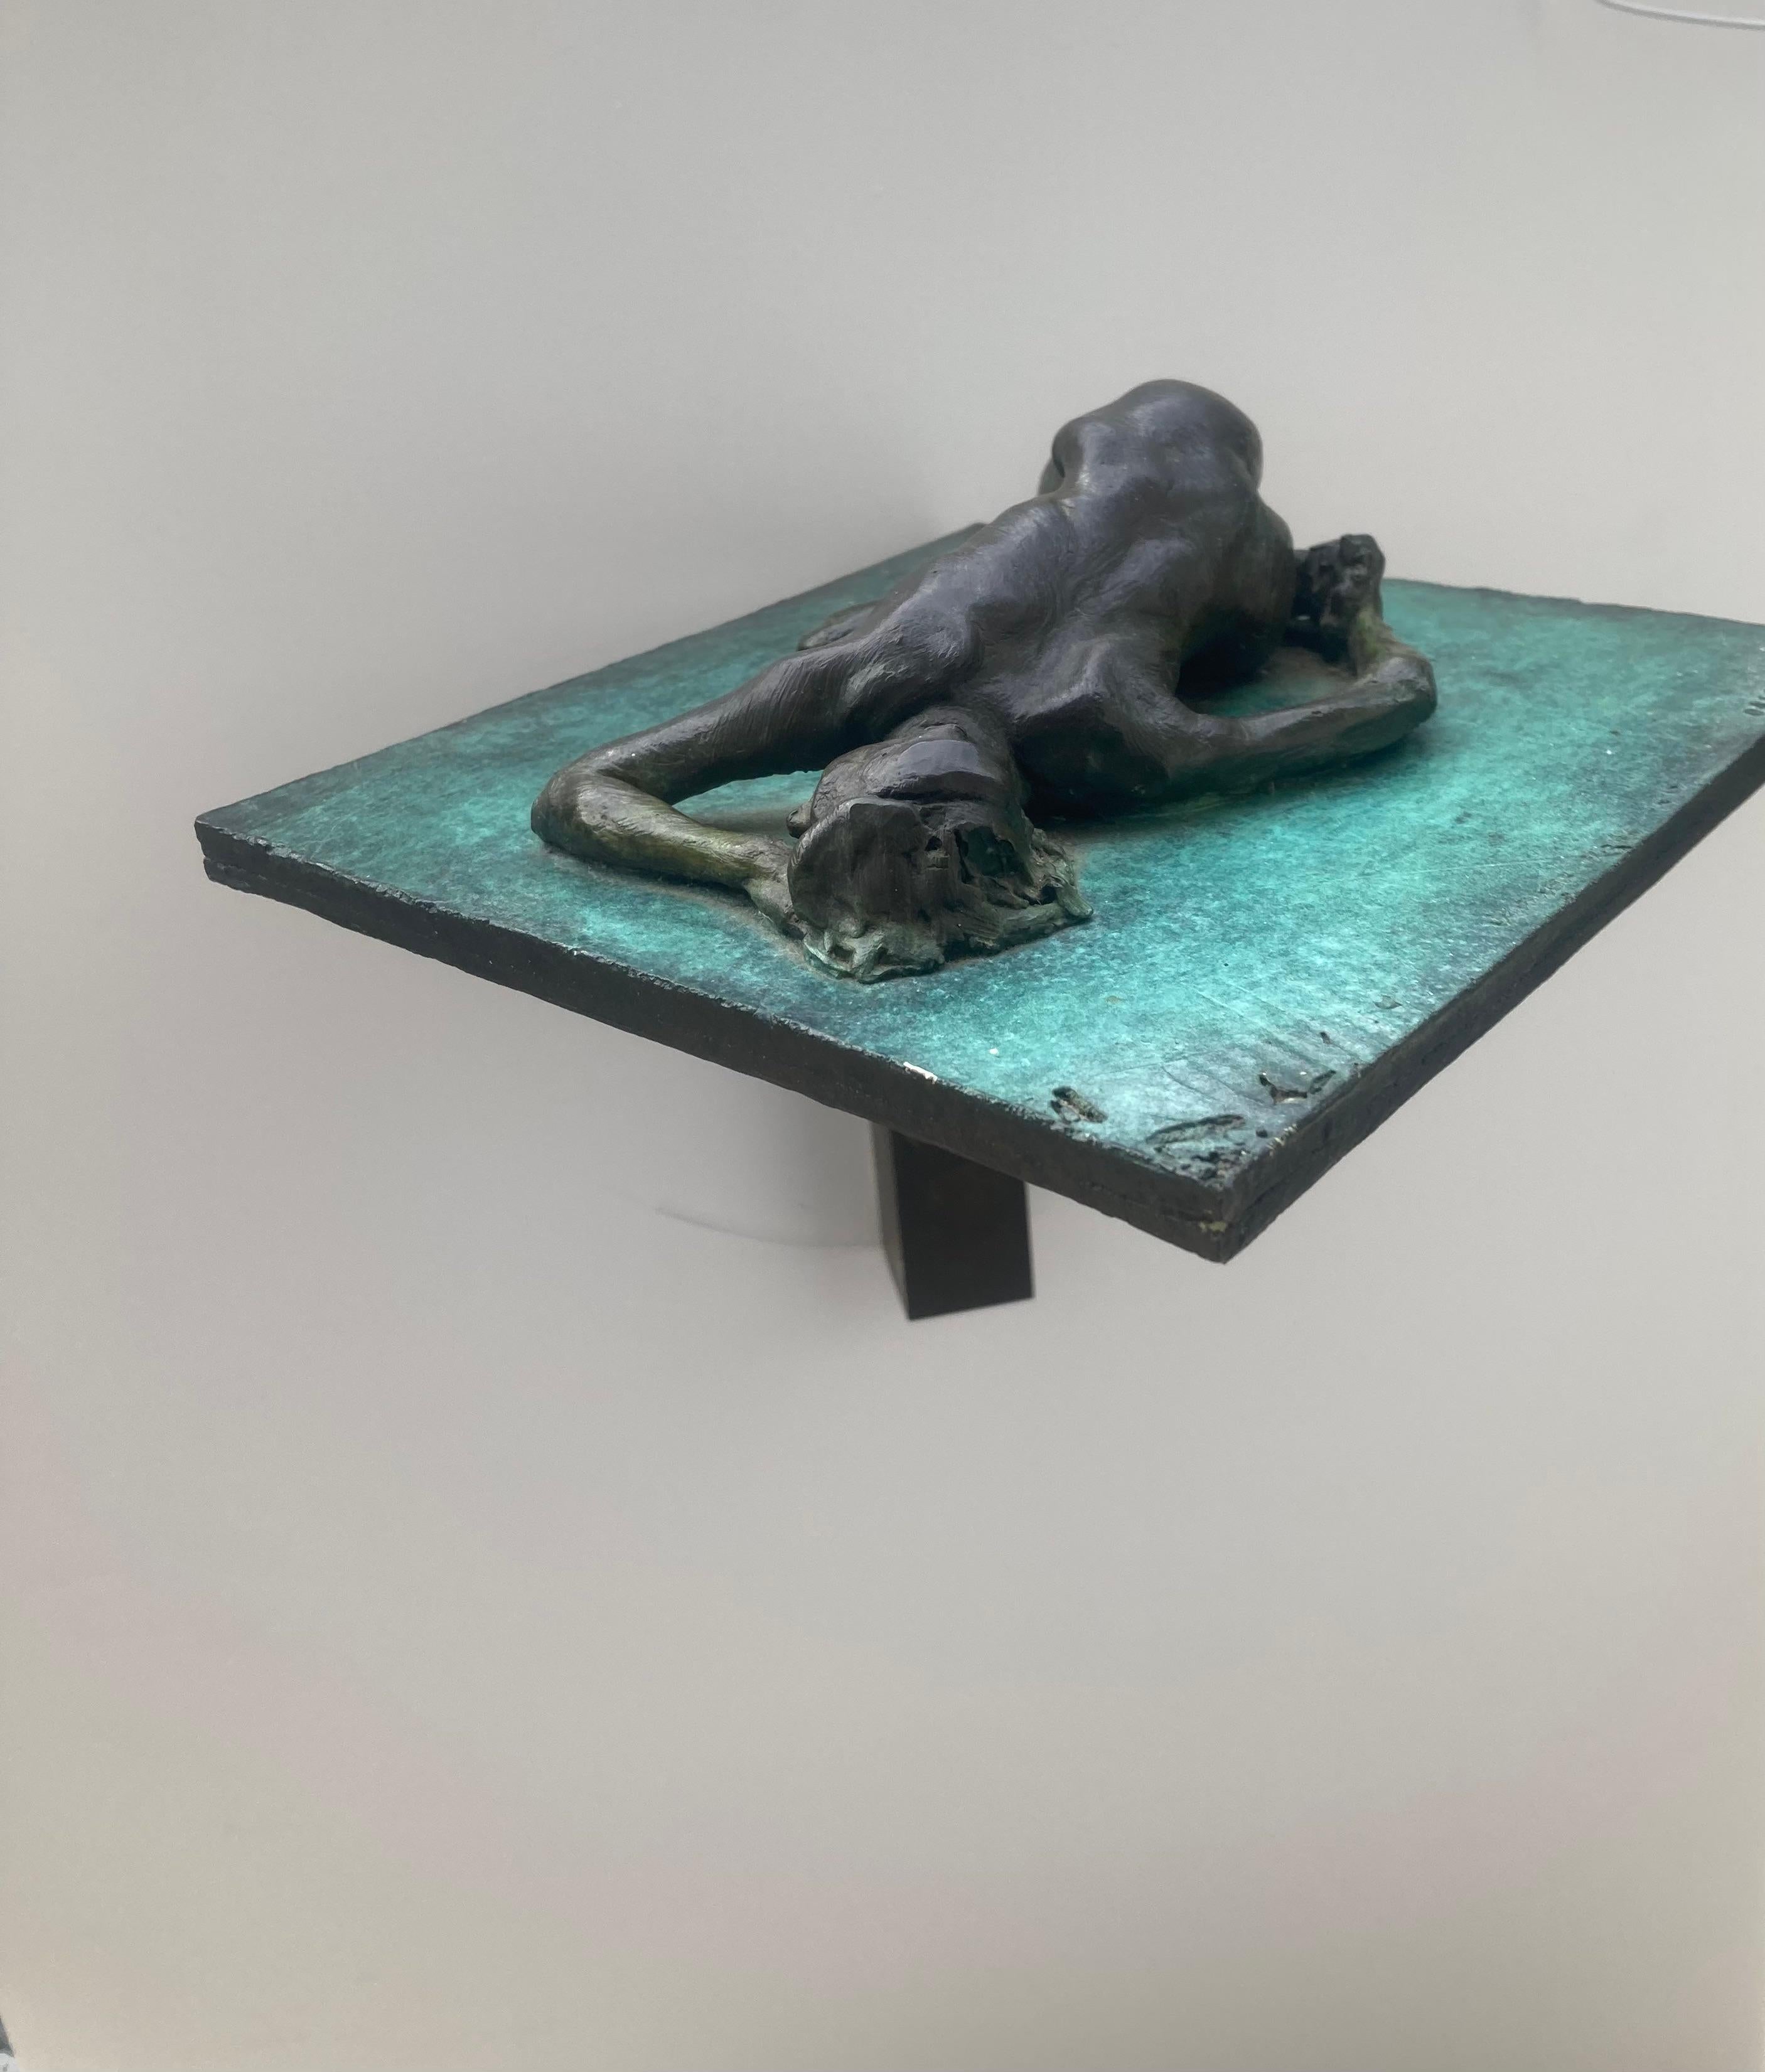 Sculpture de nu en bronze de Robert Graham, / mur/table TitreJennifer4/10,1996.RG en vente 6